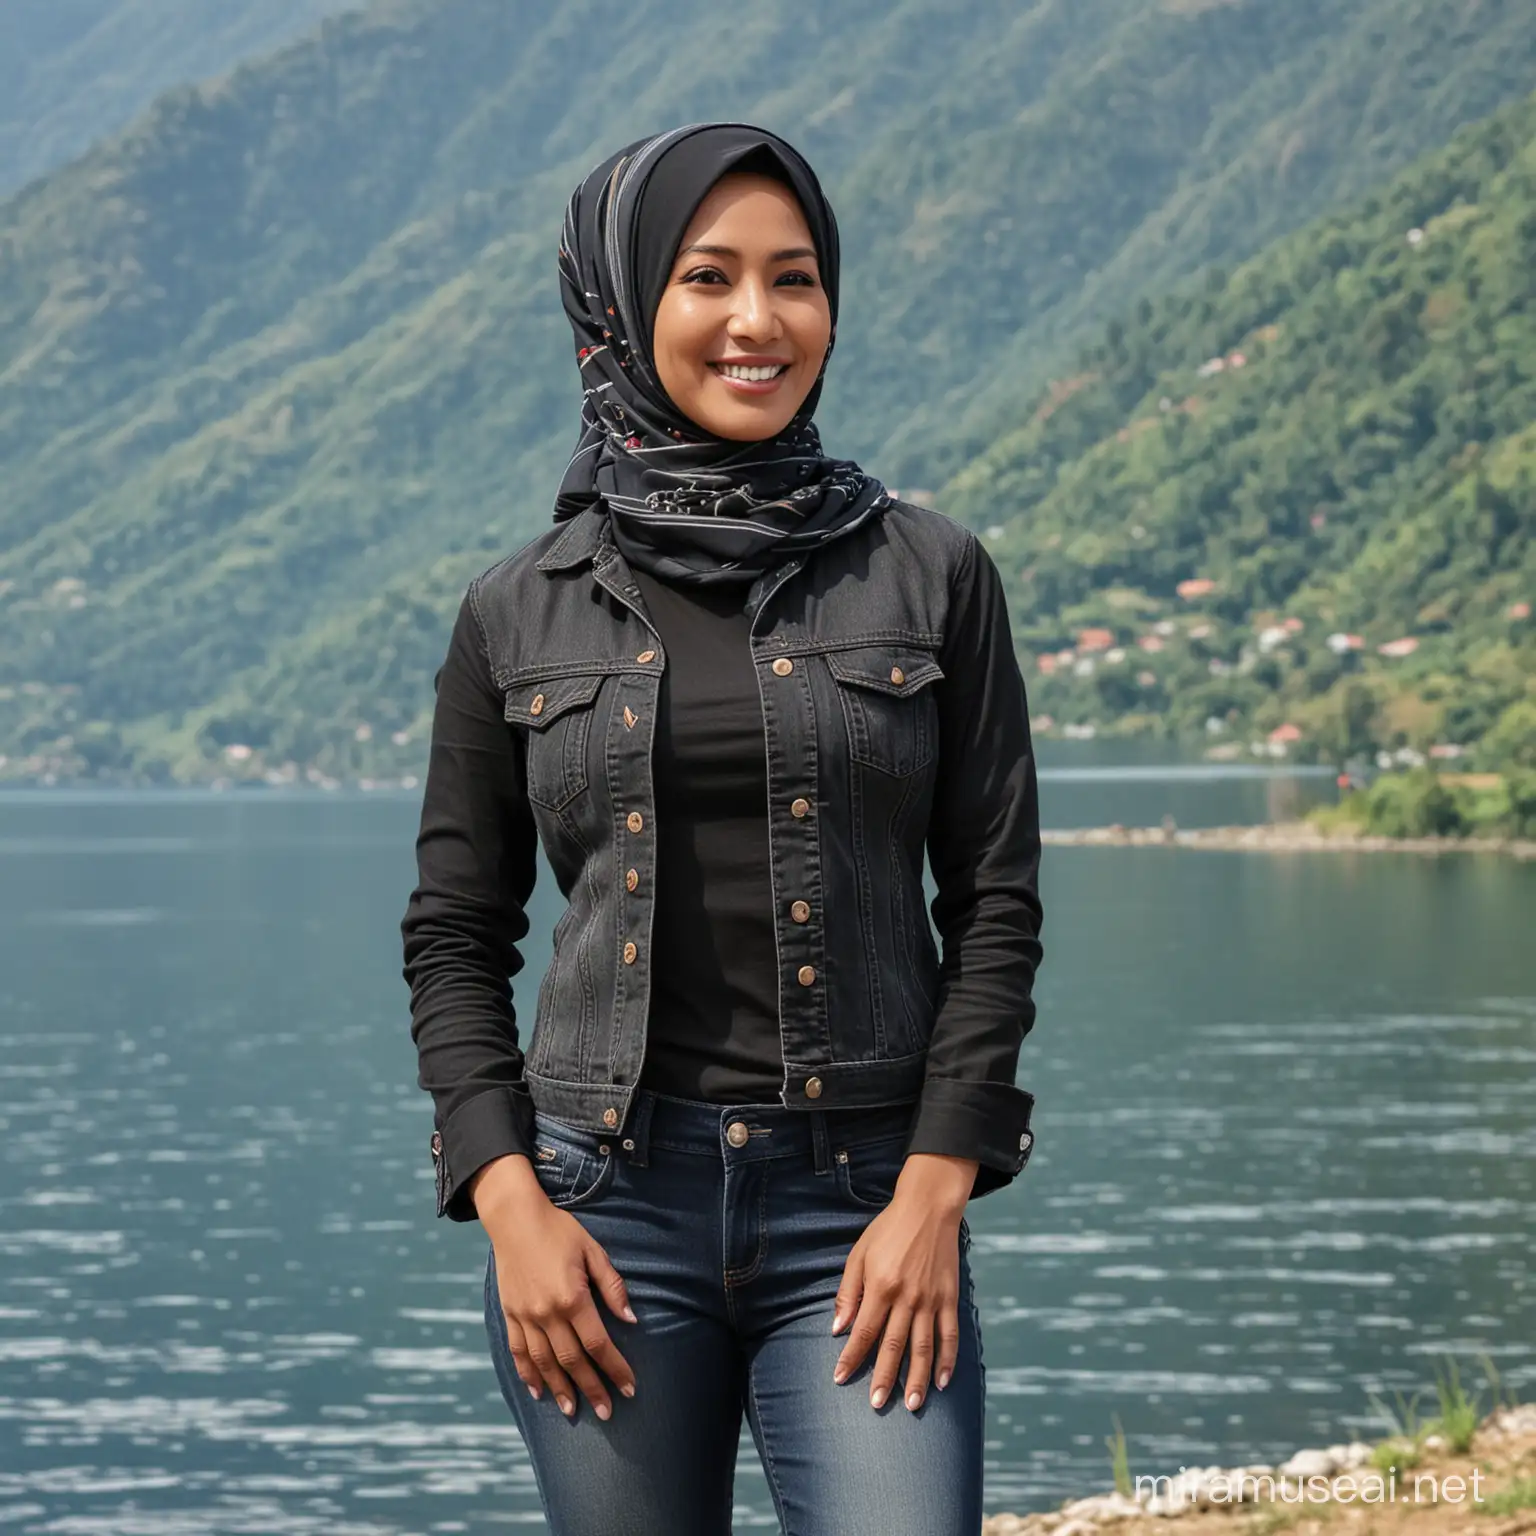 Elegant Indonesian Woman in Hijab Smiling by Lake Toba North Sumatra